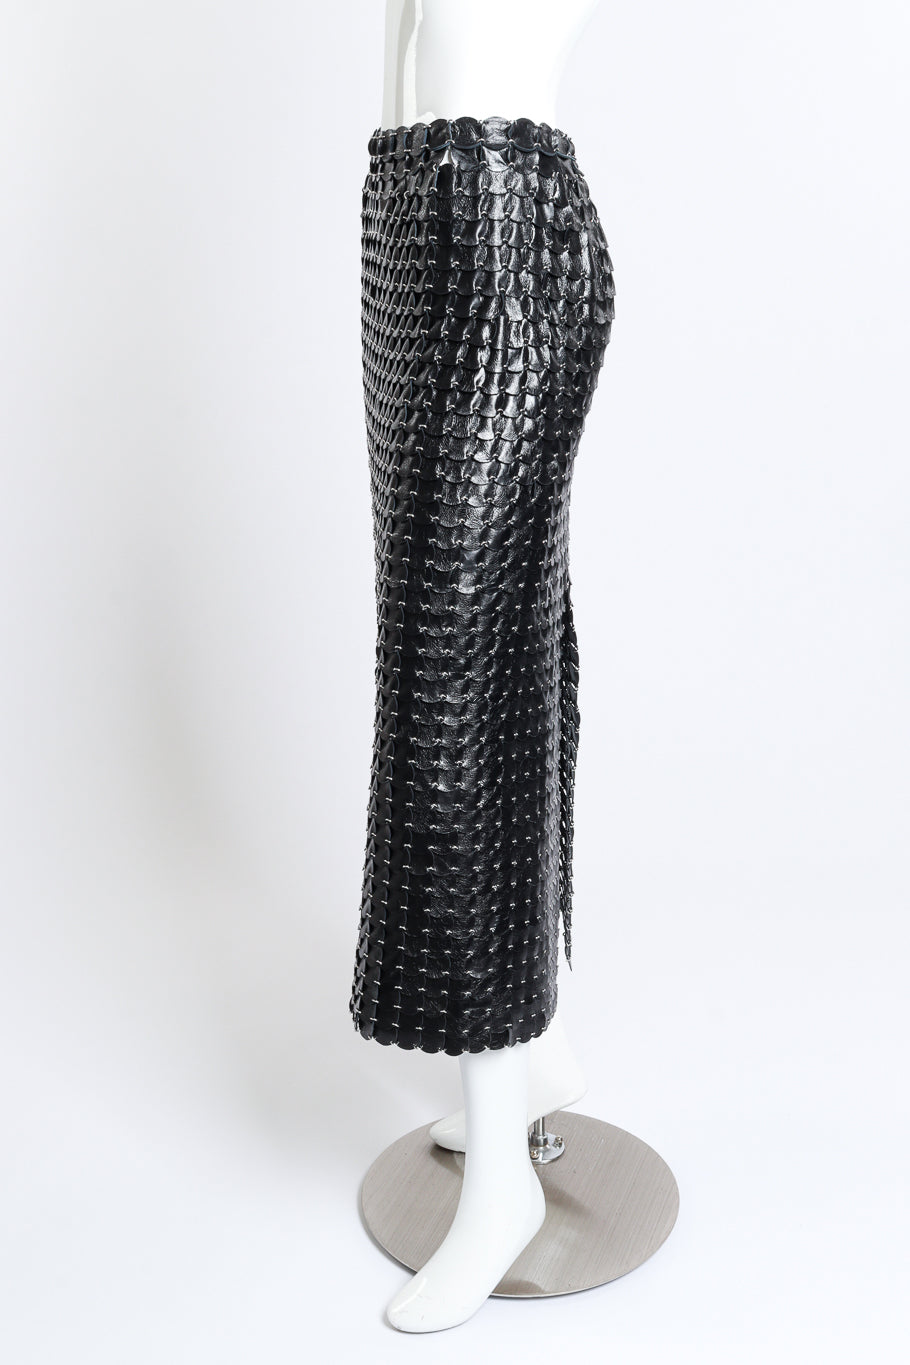 Paco Rabanne 2020 F/W Skirt side mannequin @RECESS LA